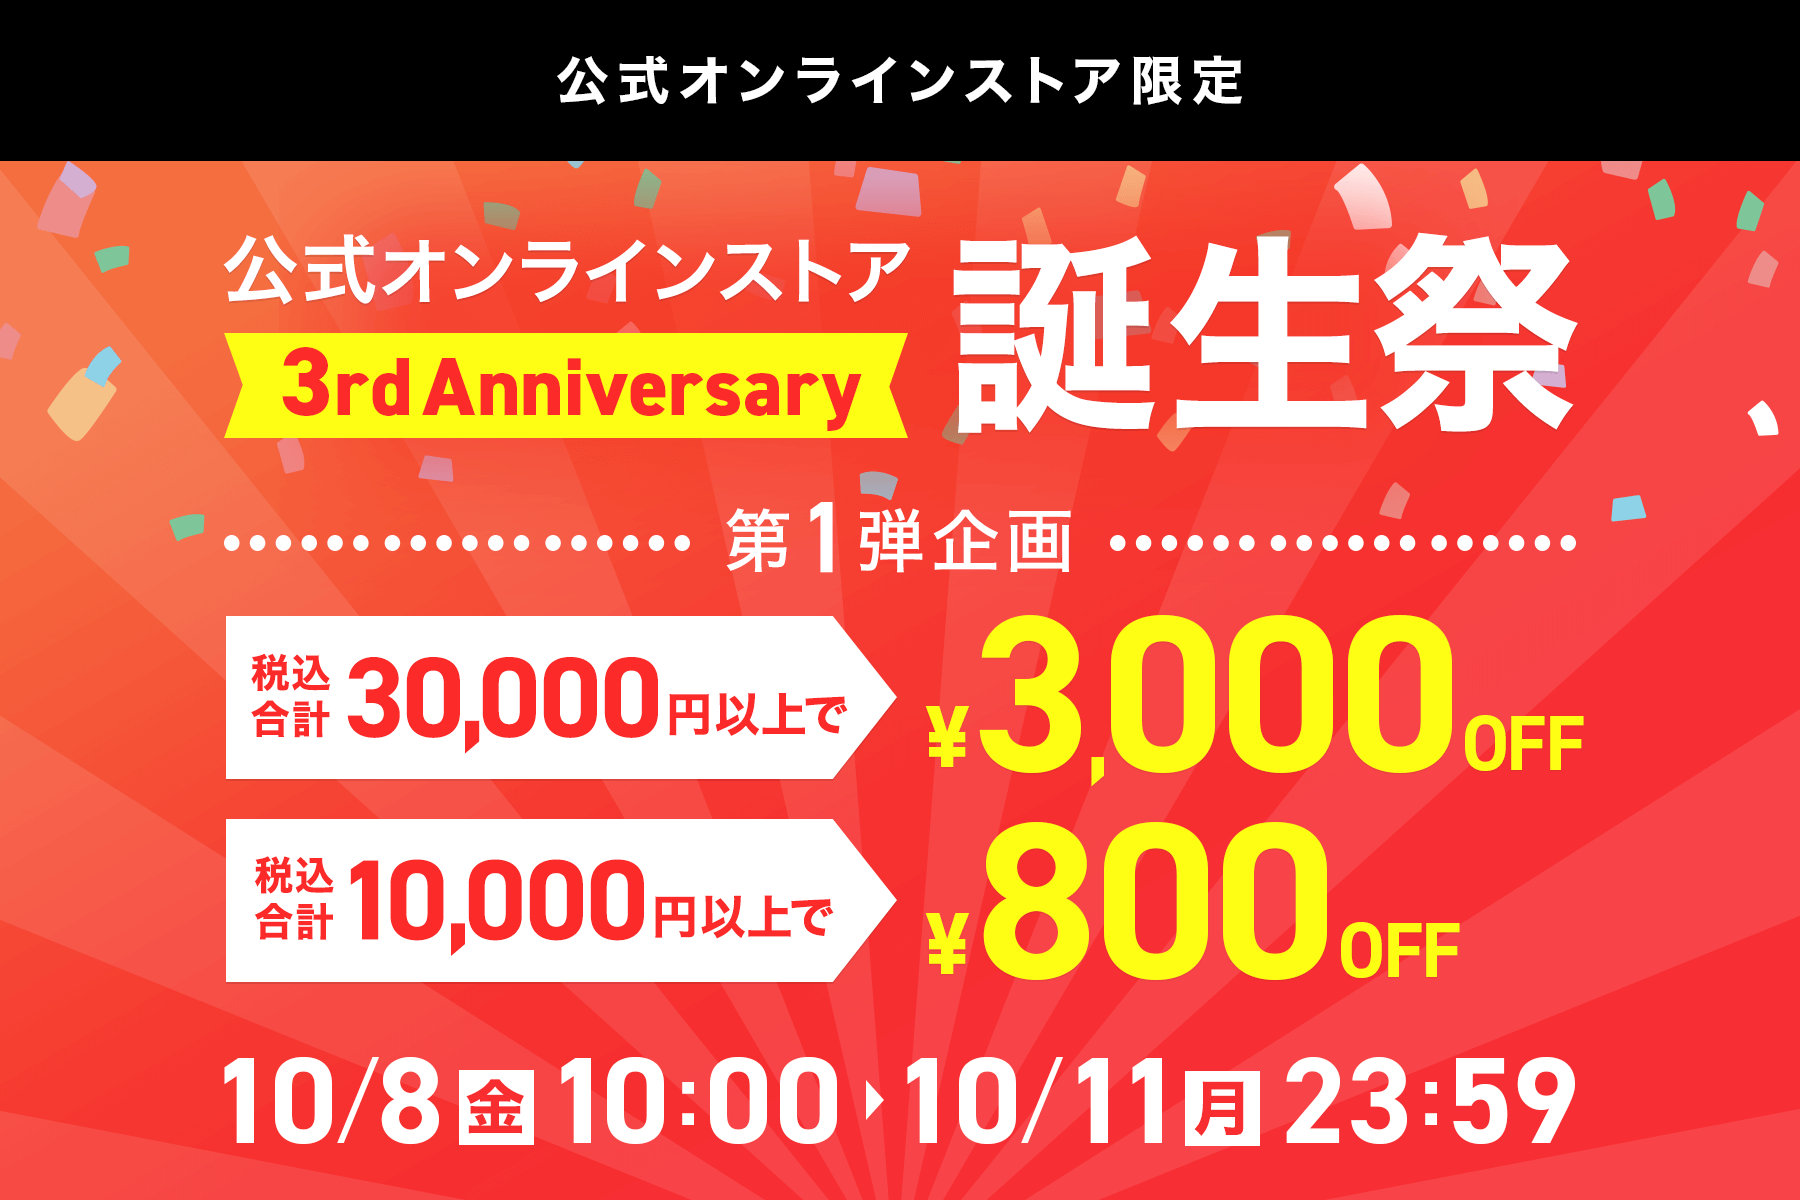 SPORTS DEPO スポーツデポ on Twitter: "【MAX3,000円OFF＆送料無料】アルペングループオンラインストアは